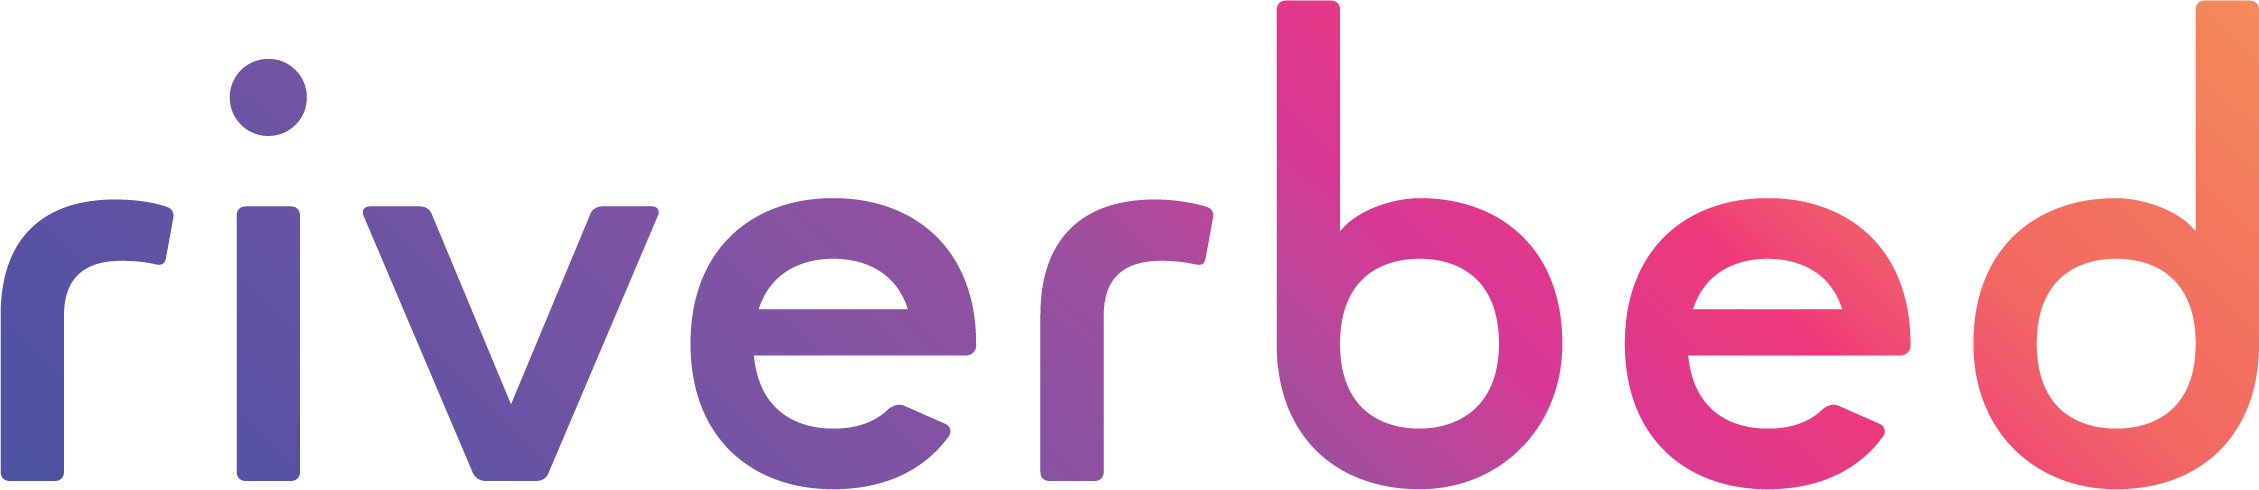 Riverbed  logo